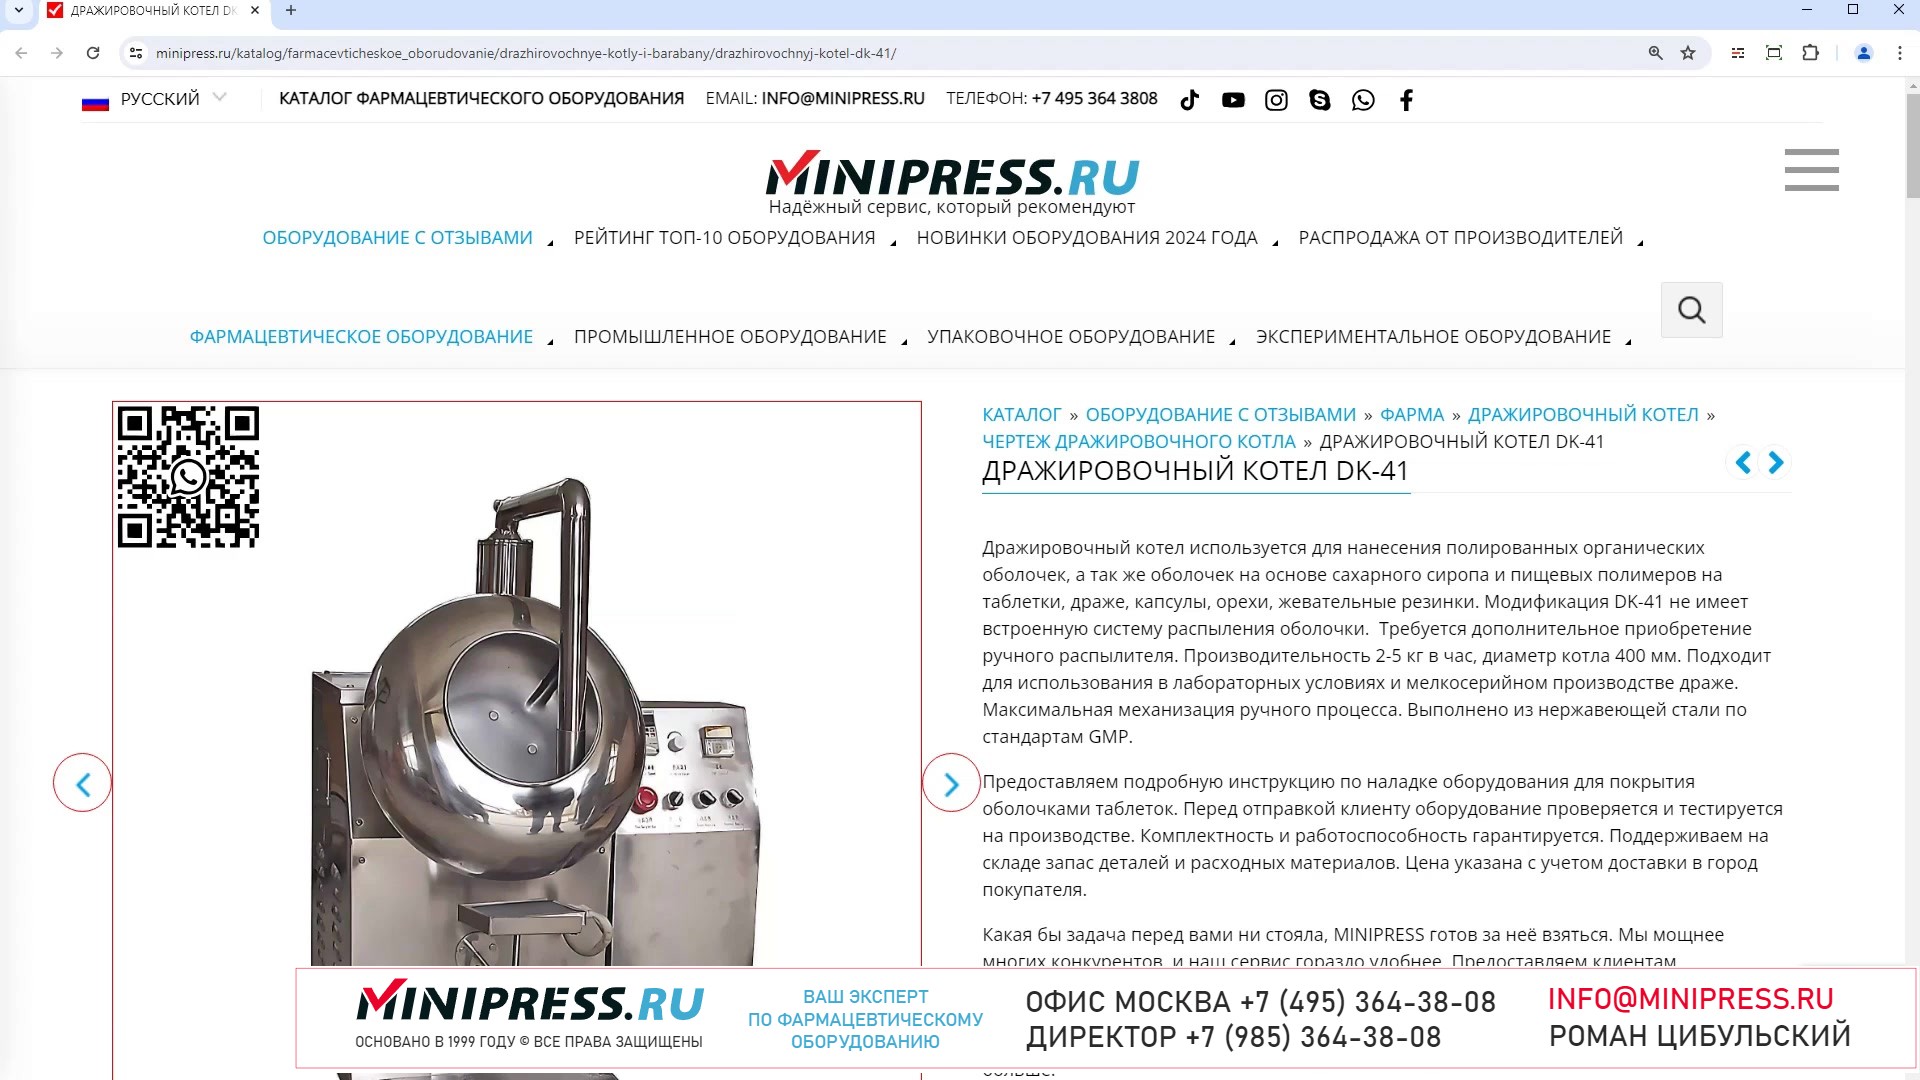 Minipress.ru Дражировочный котел DK-41